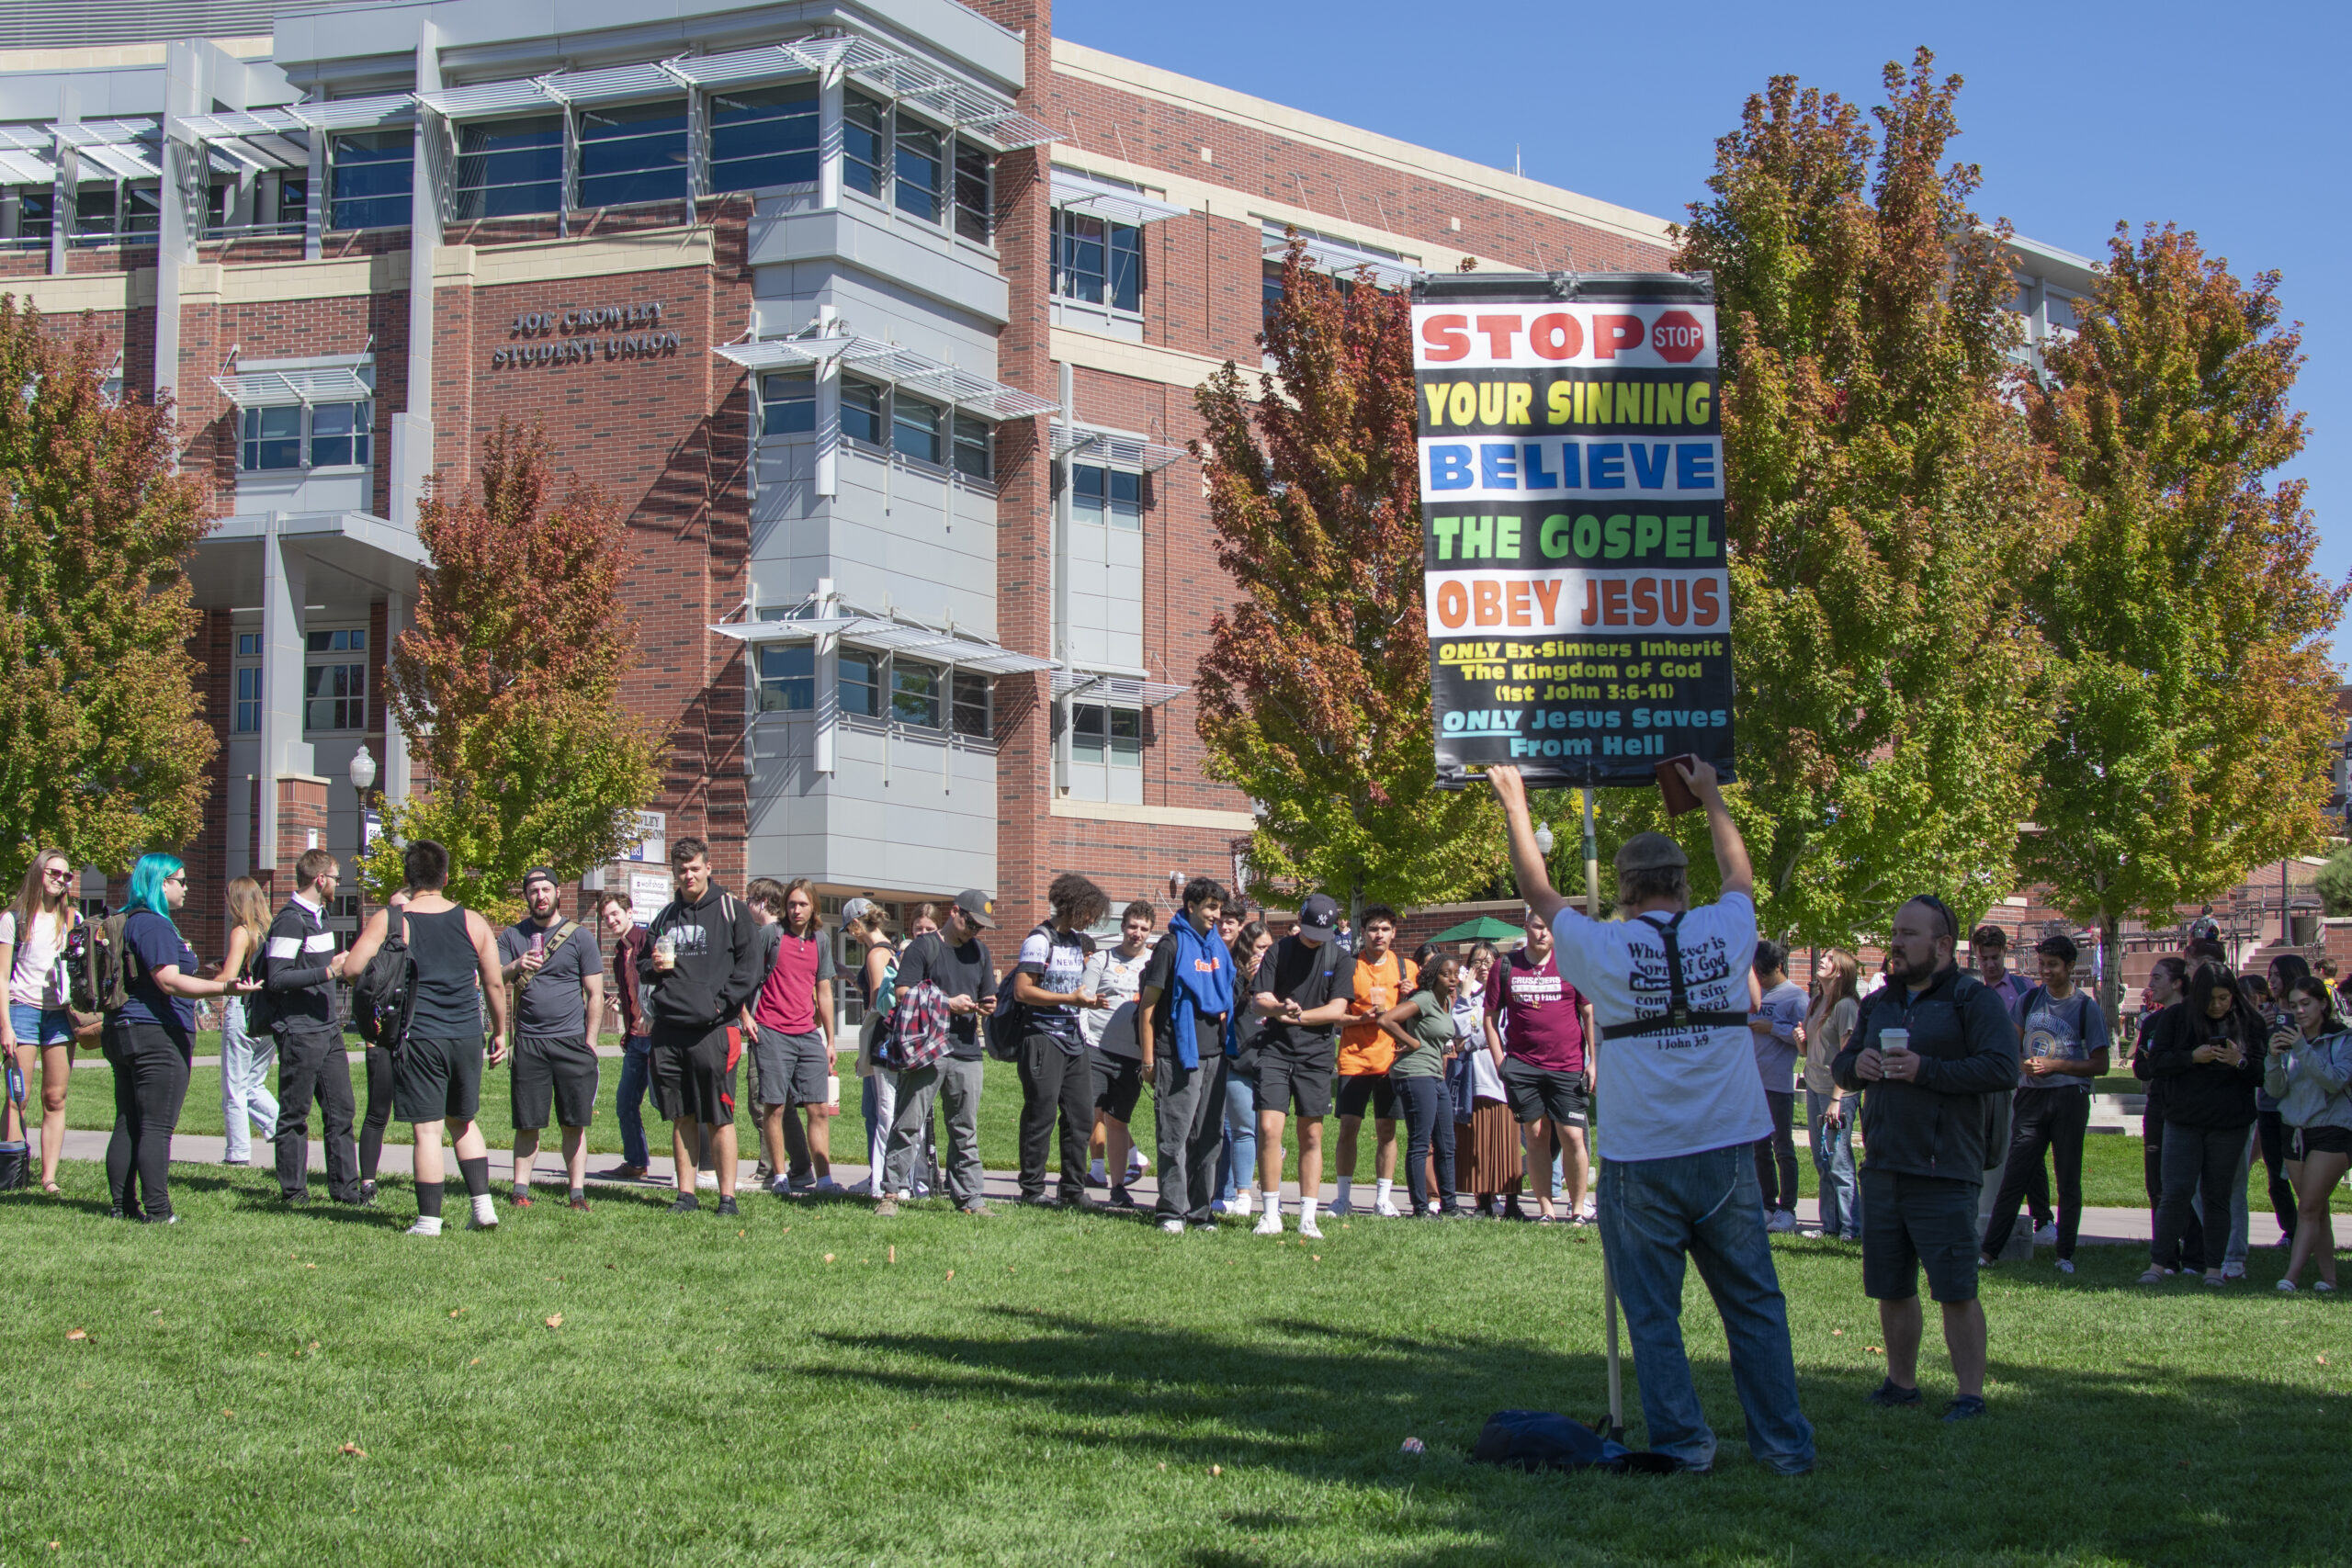 Students versus Daniel John Lee, preacher demonstrations return